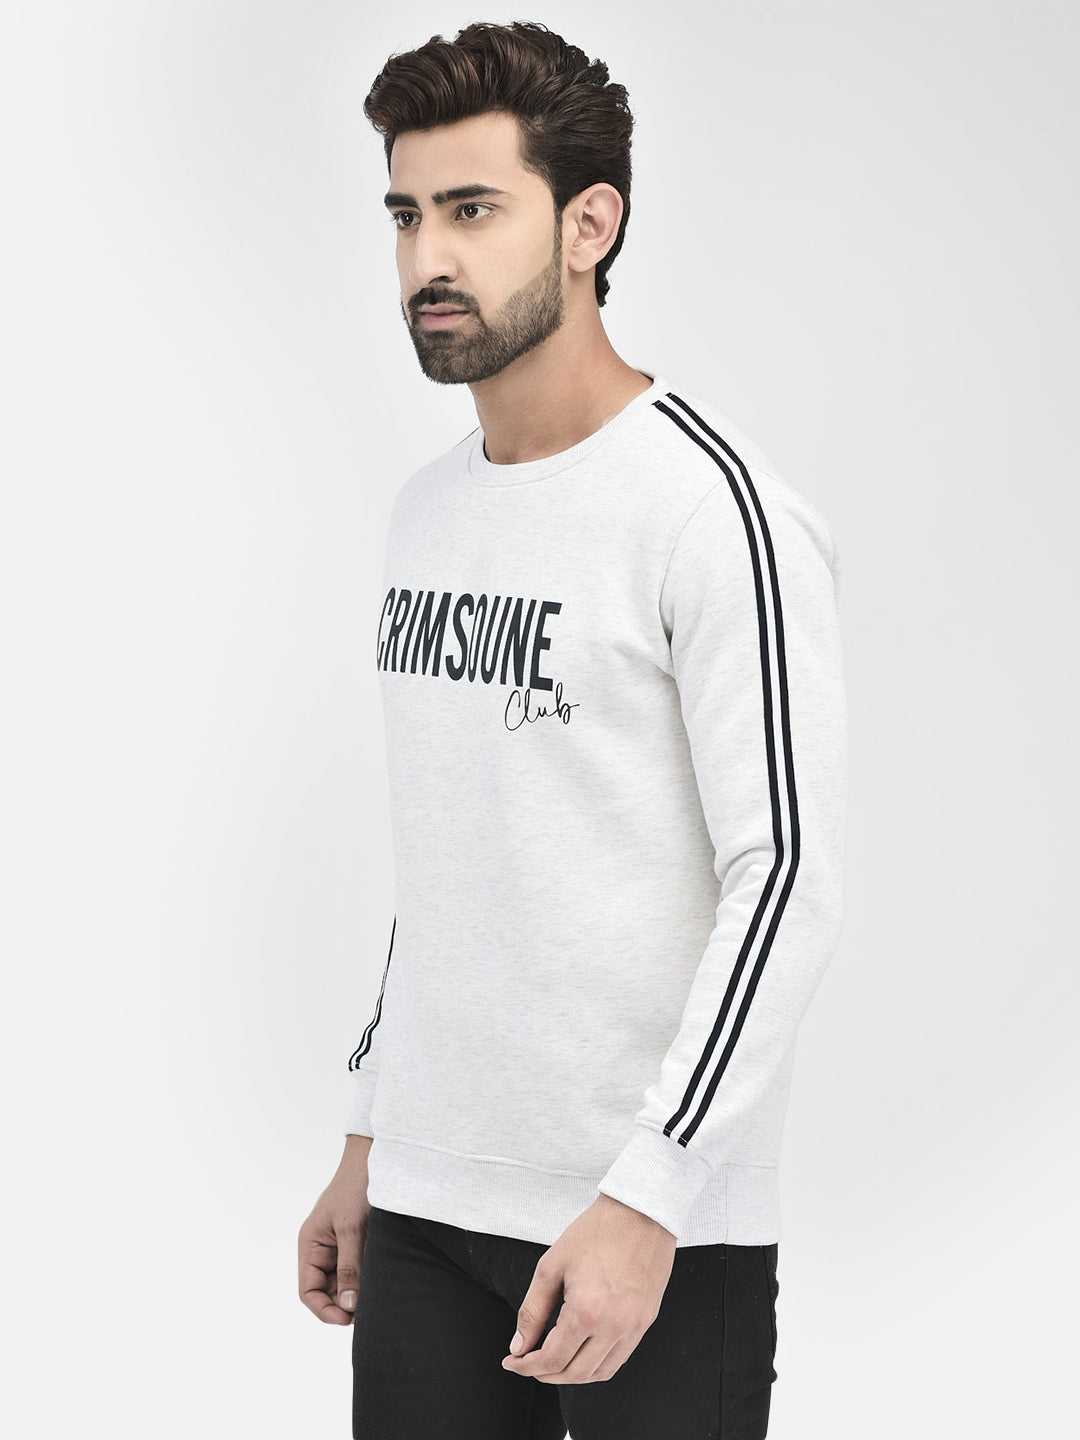 Grey Melange Printed Sweatshirt-Men Sweatshirts-Crimsoune Club